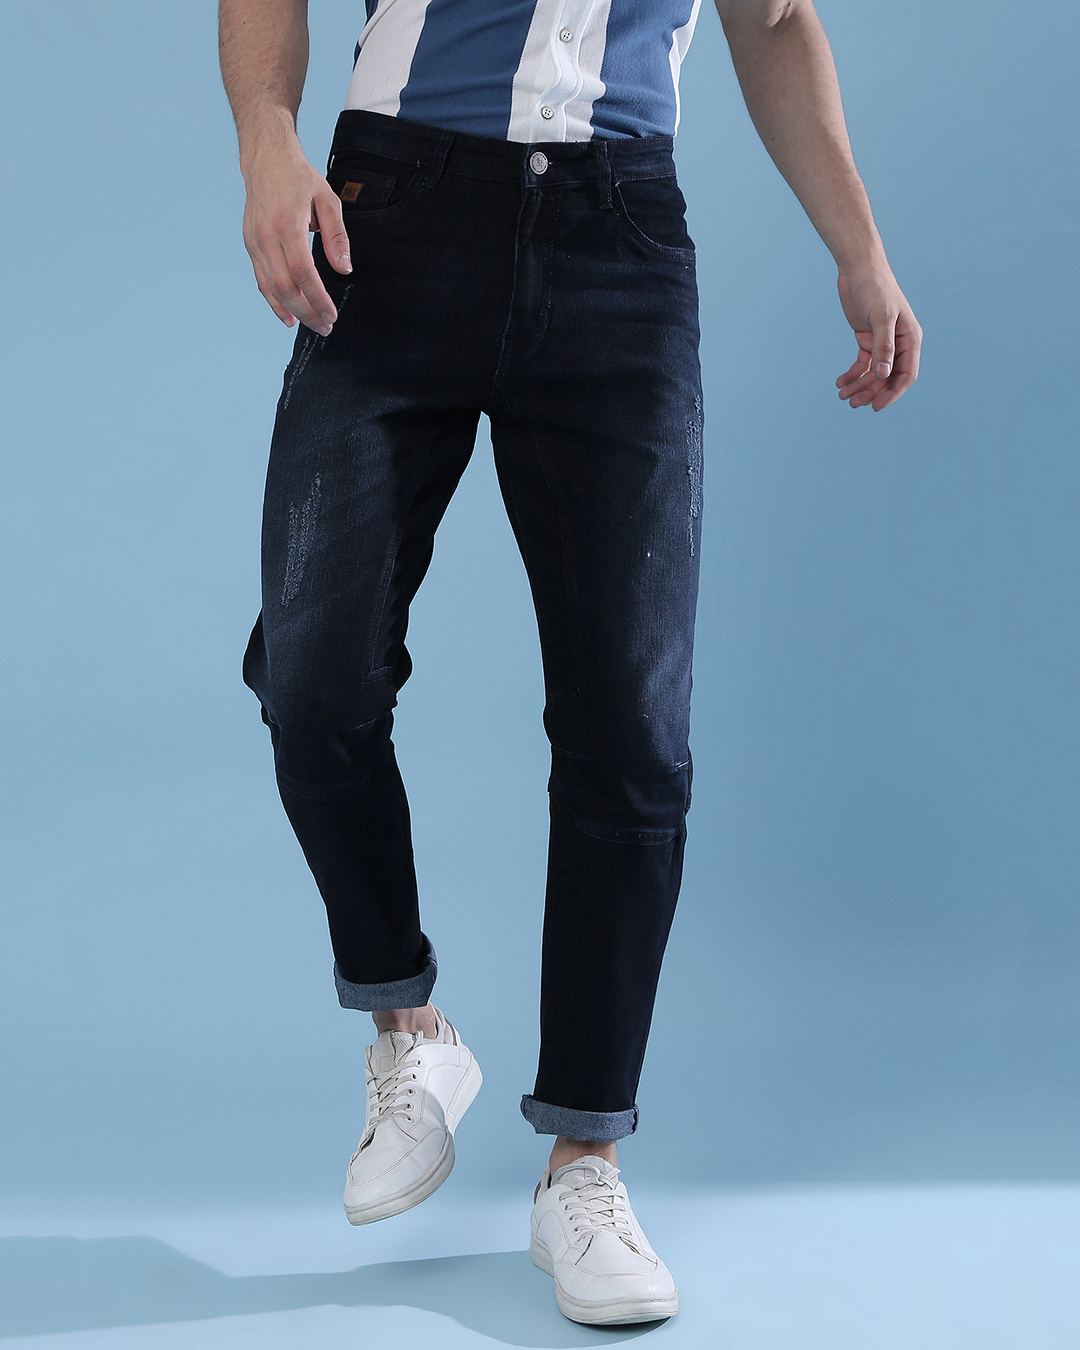 Buy Campus Sutra Men's Blue Regular Fit Jeans Online at Bewakoof